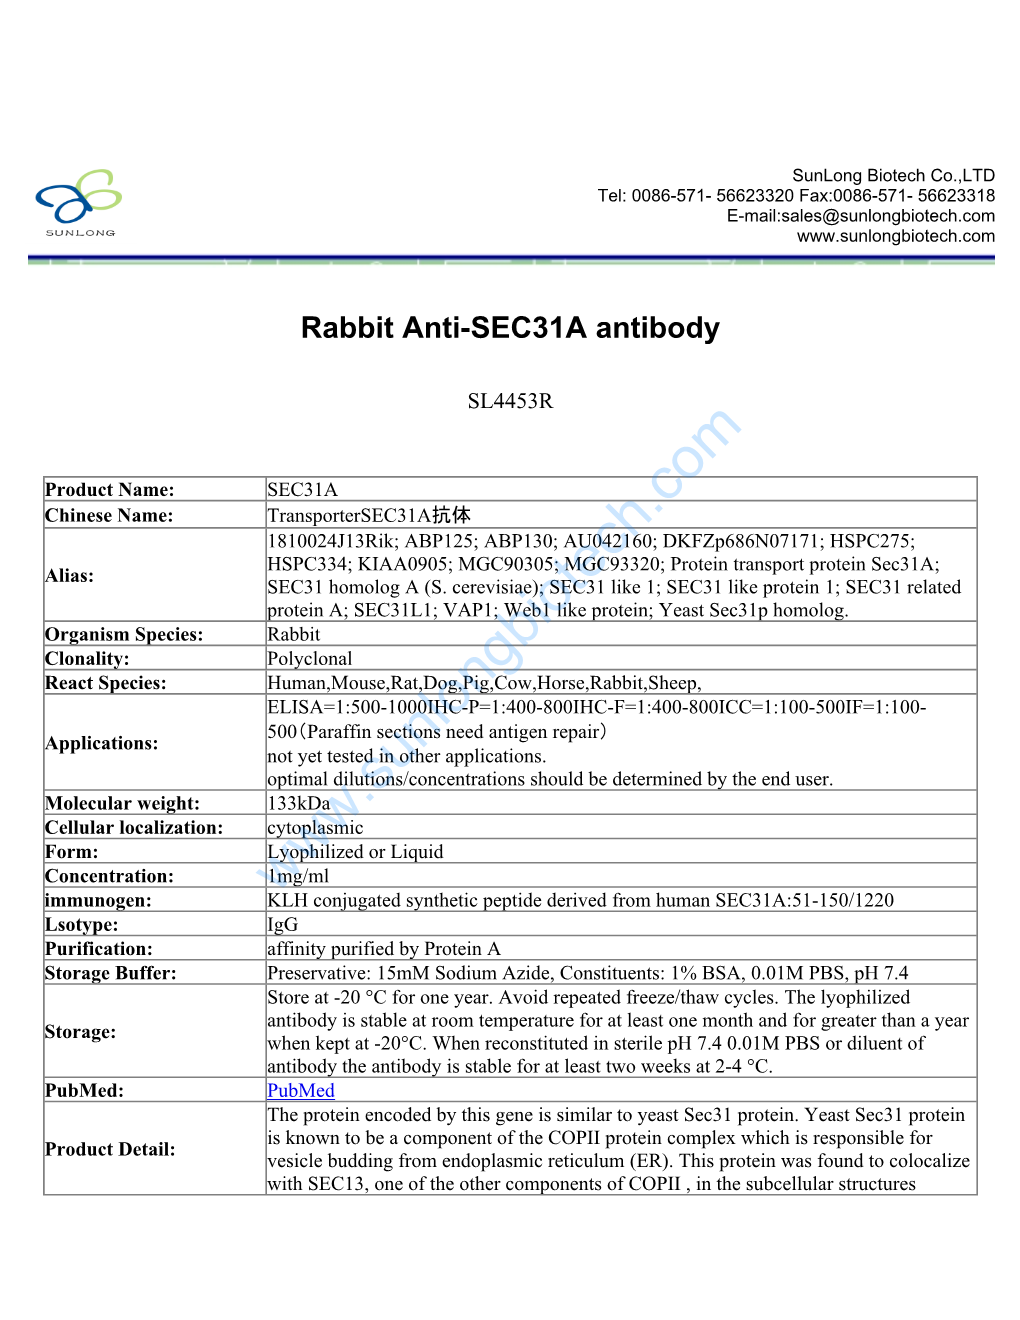 Rabbit Anti-SEC31A Antibody-SL4453R